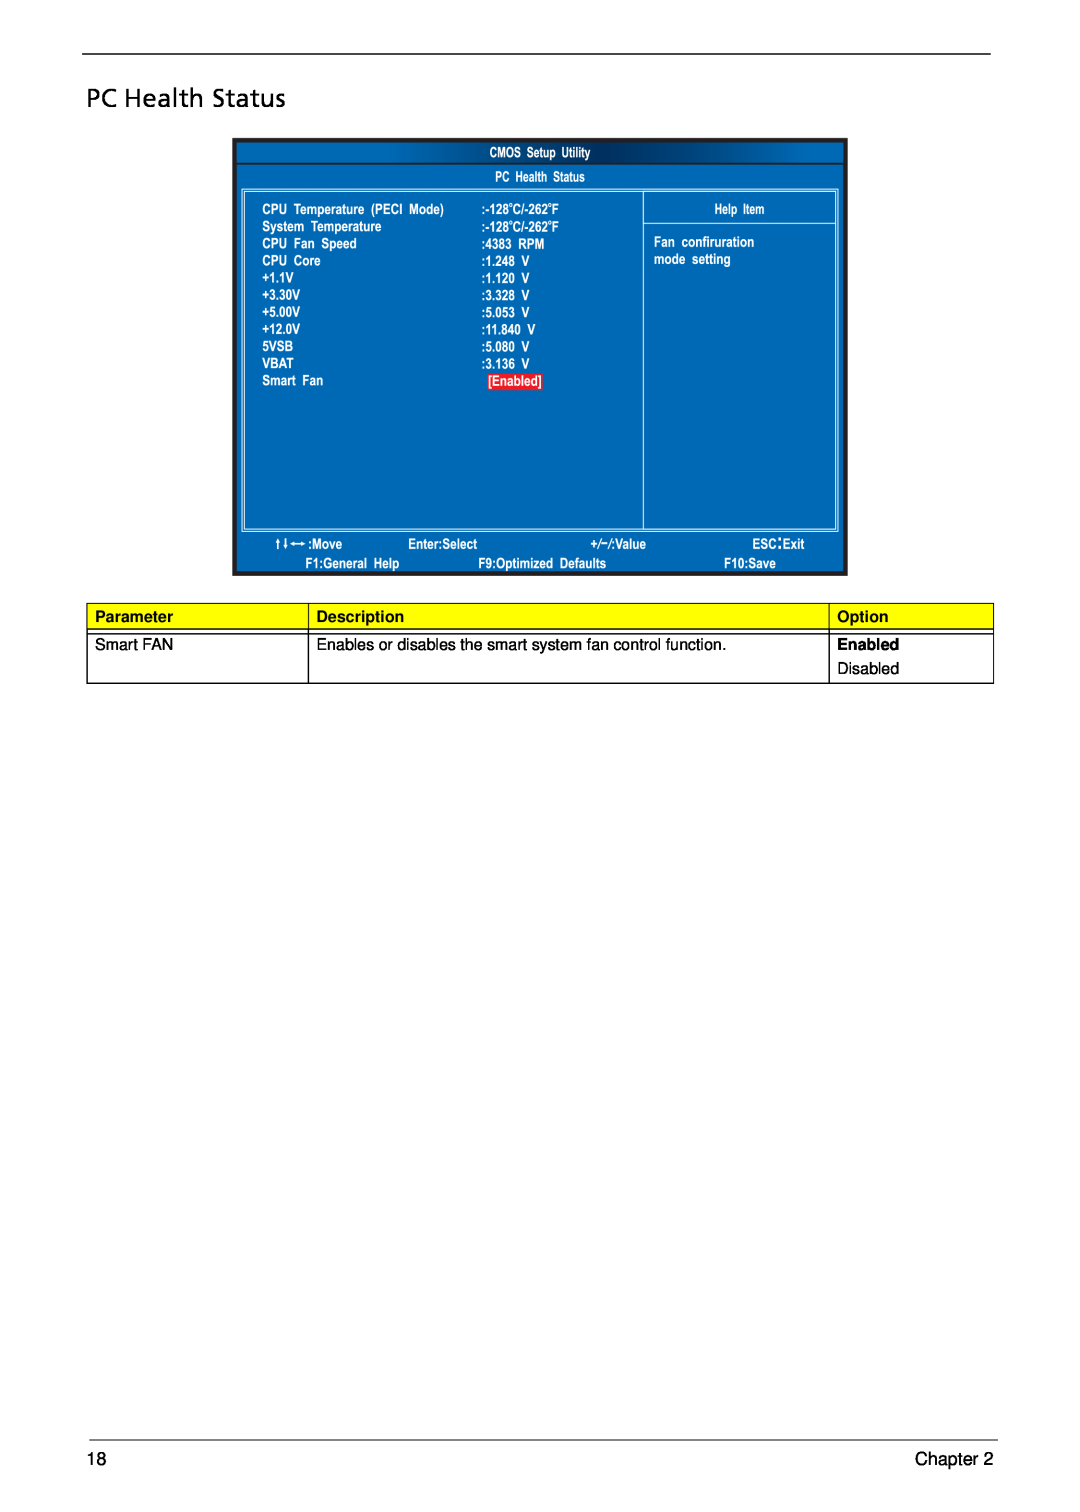 Acer X3812, X5812 manual PC Health Status, Parameter, Description, Option, Smart FAN, Enabled, Disabled 